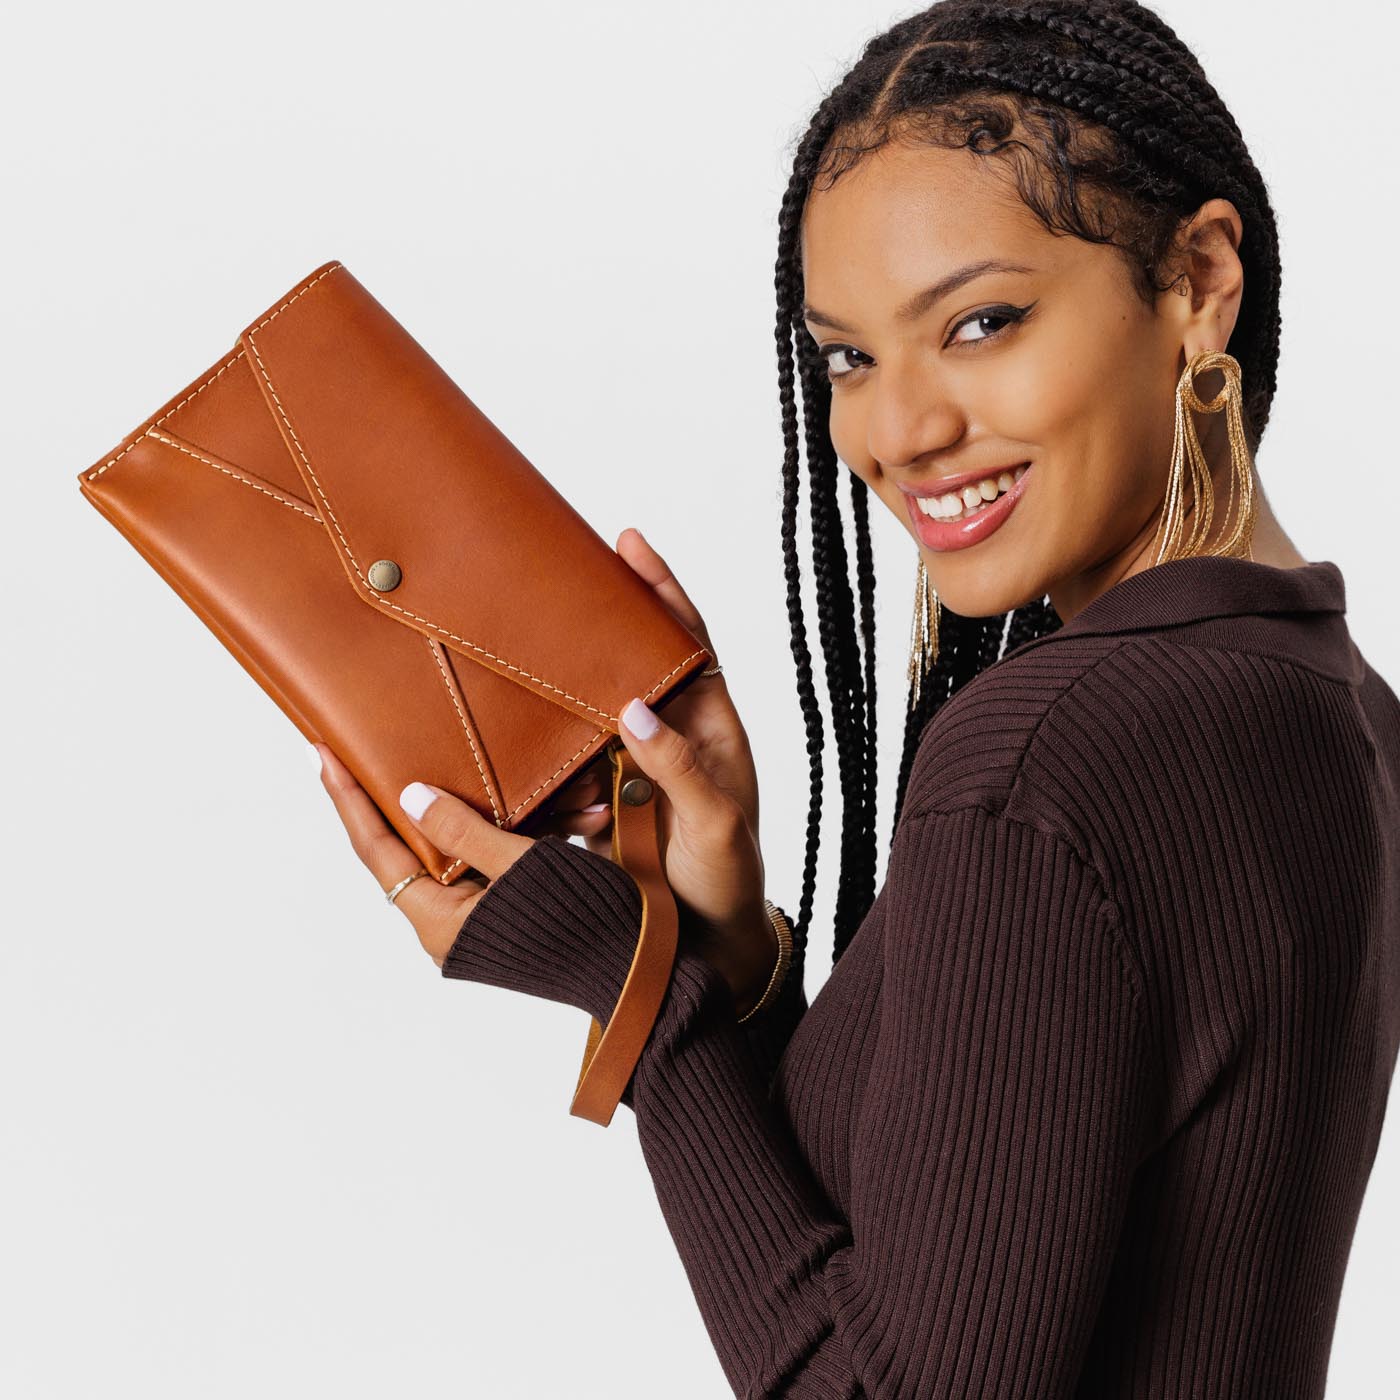 Prada Envelope wallet | Prada handbags, Purses, Envelope wallet